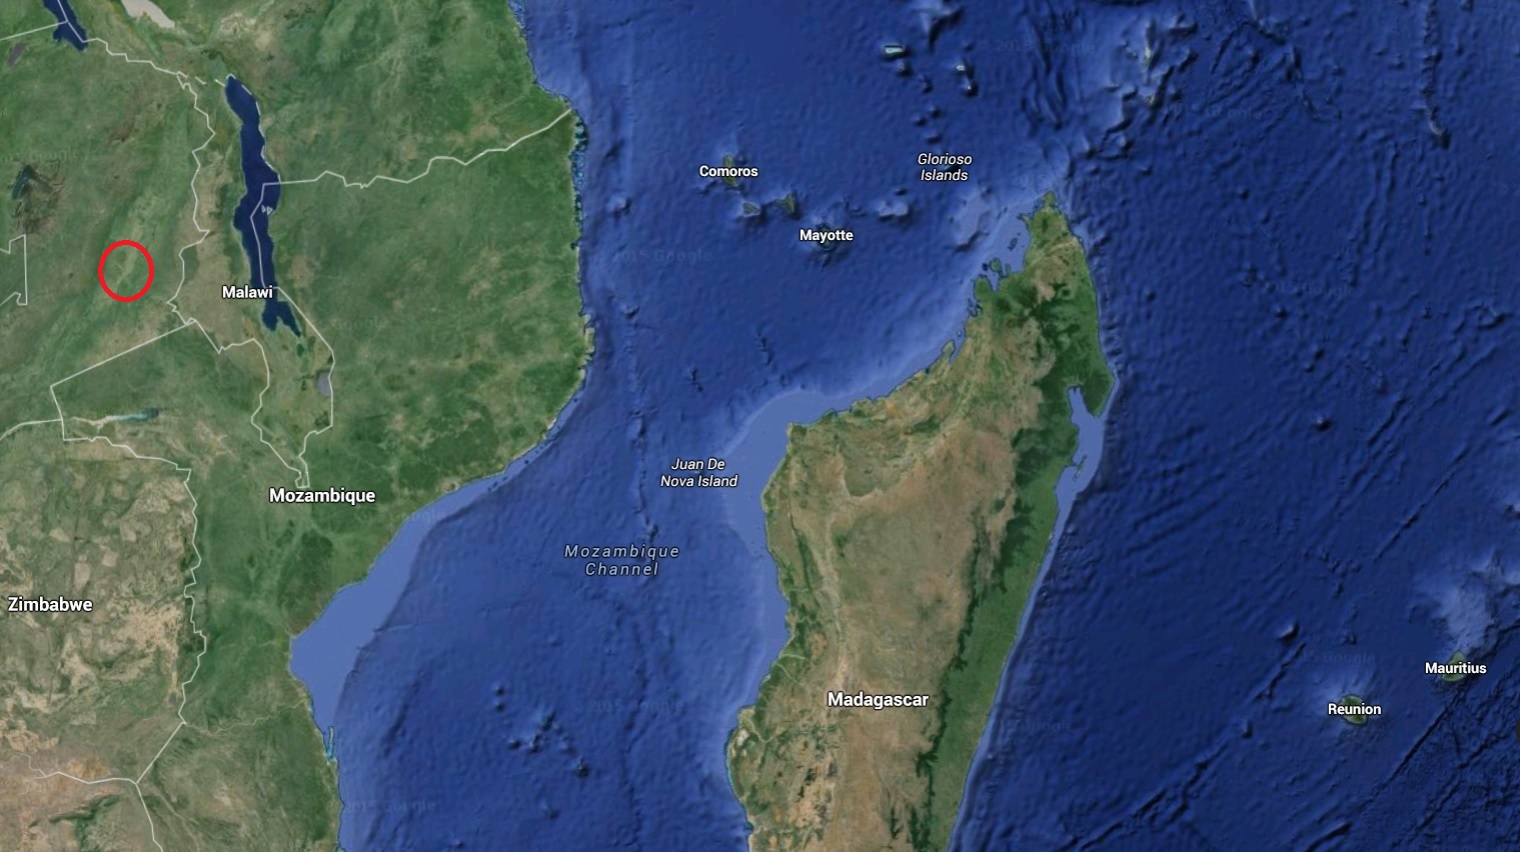 Мадагаскар карт 3. Остров Мадагаскар на карте. Самый длинный пролив Мозамбикский пролив. Мадагаскар государство на карте. Острова возле Мадагаскара карта.